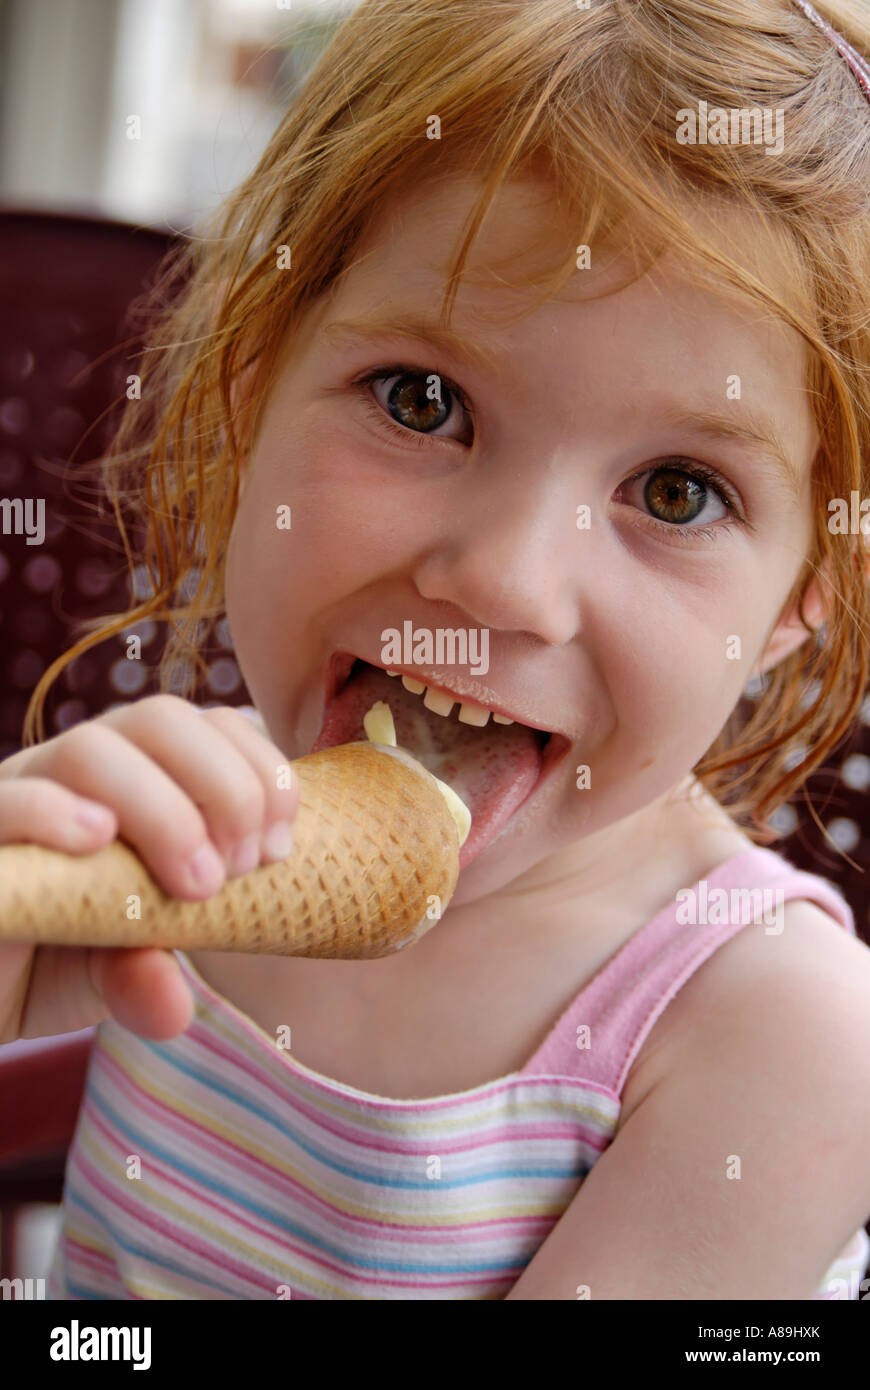 Child eating ice-cream Stock Photo